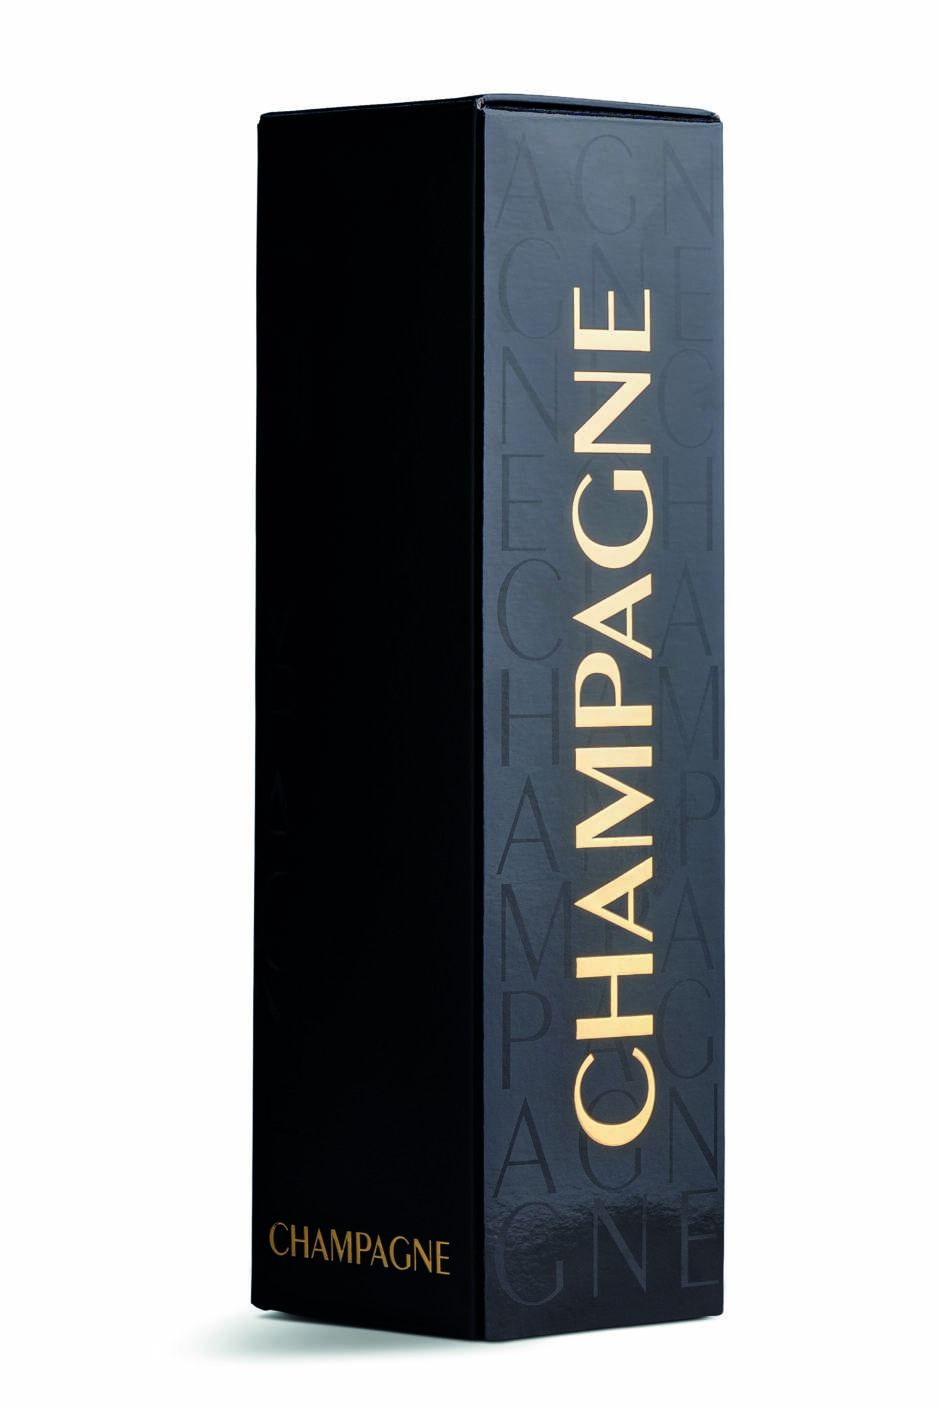 Norbert Deux-Coeurs Champagner Magnum